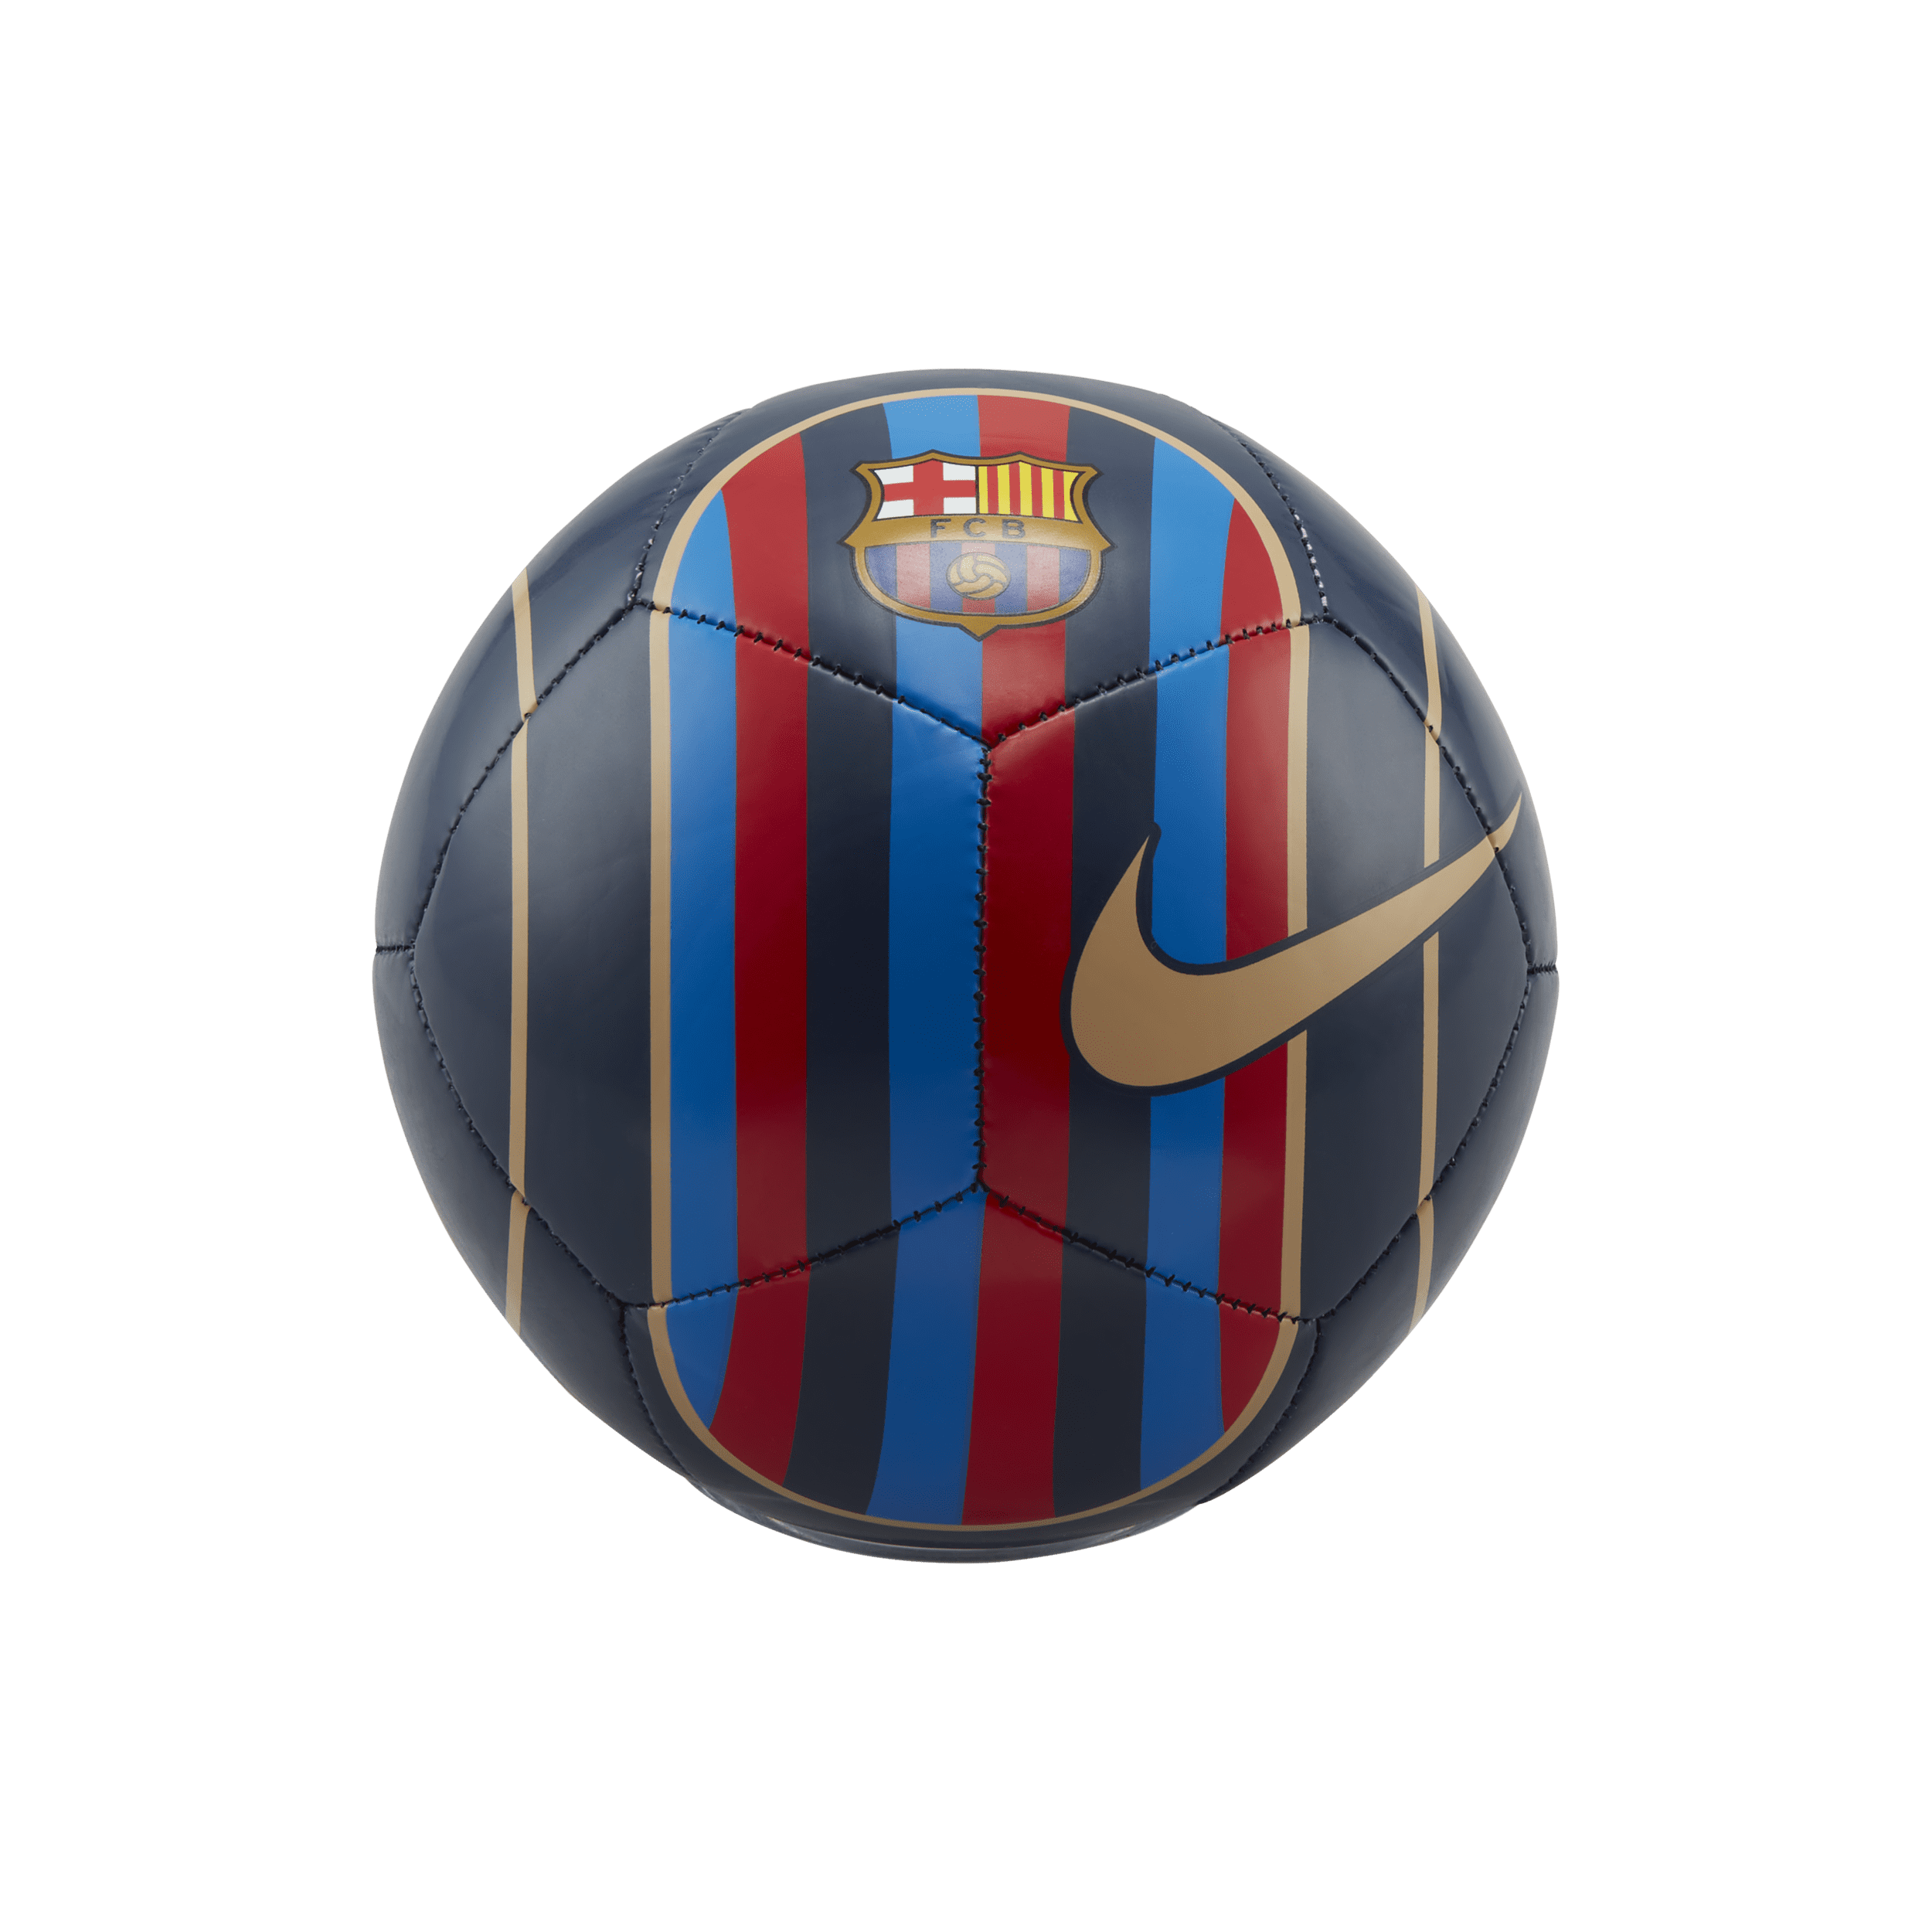 Nike FC Barcelona Skills Voetbal - Blauw